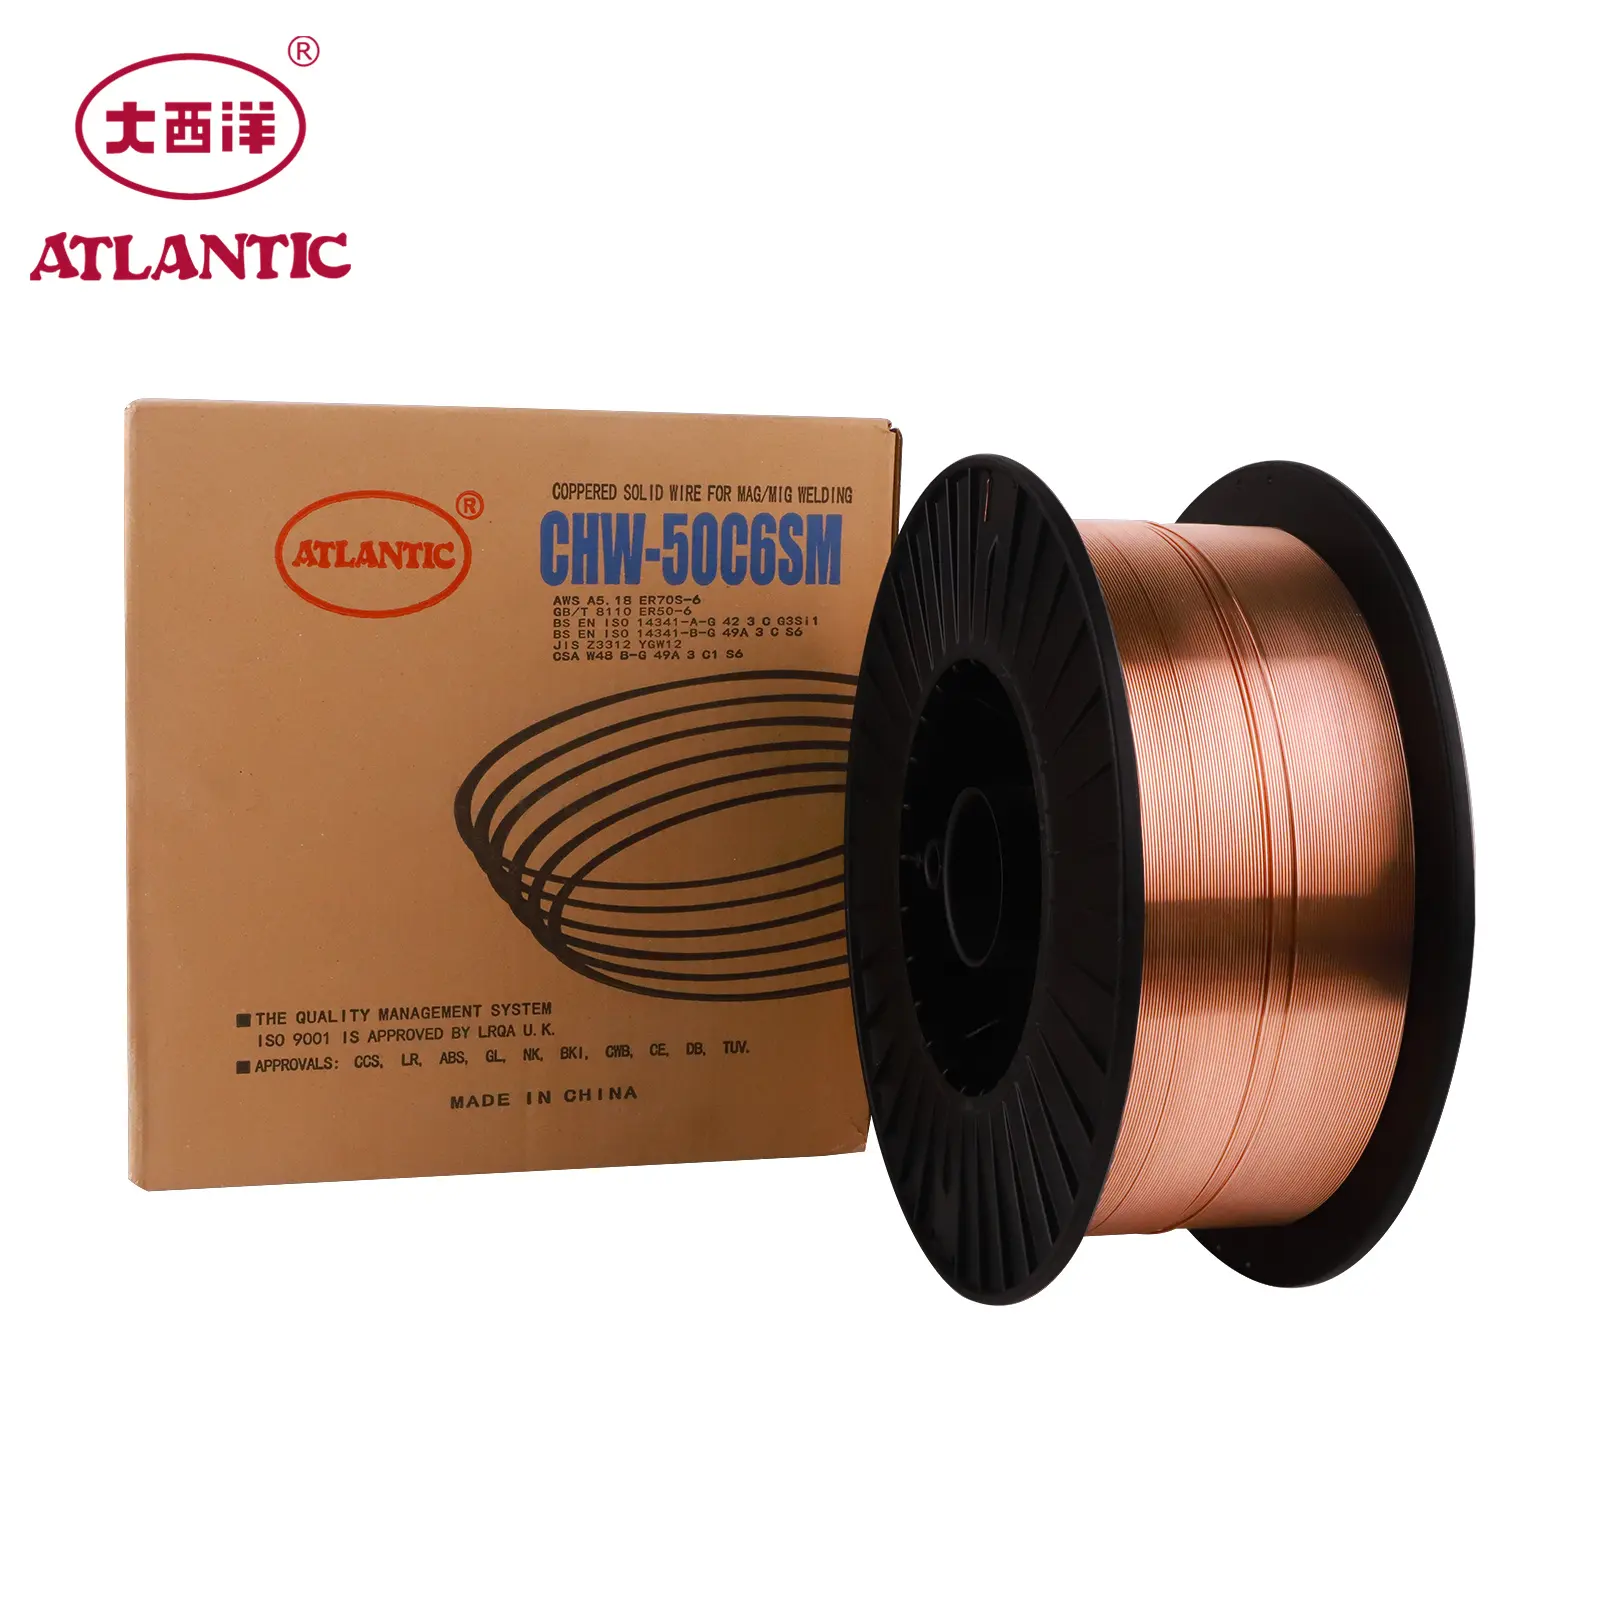 Cable de soldadura de cobre sólido blindado, GMAW, gas CO2, AWS A5.18 ER70S-6 SG2